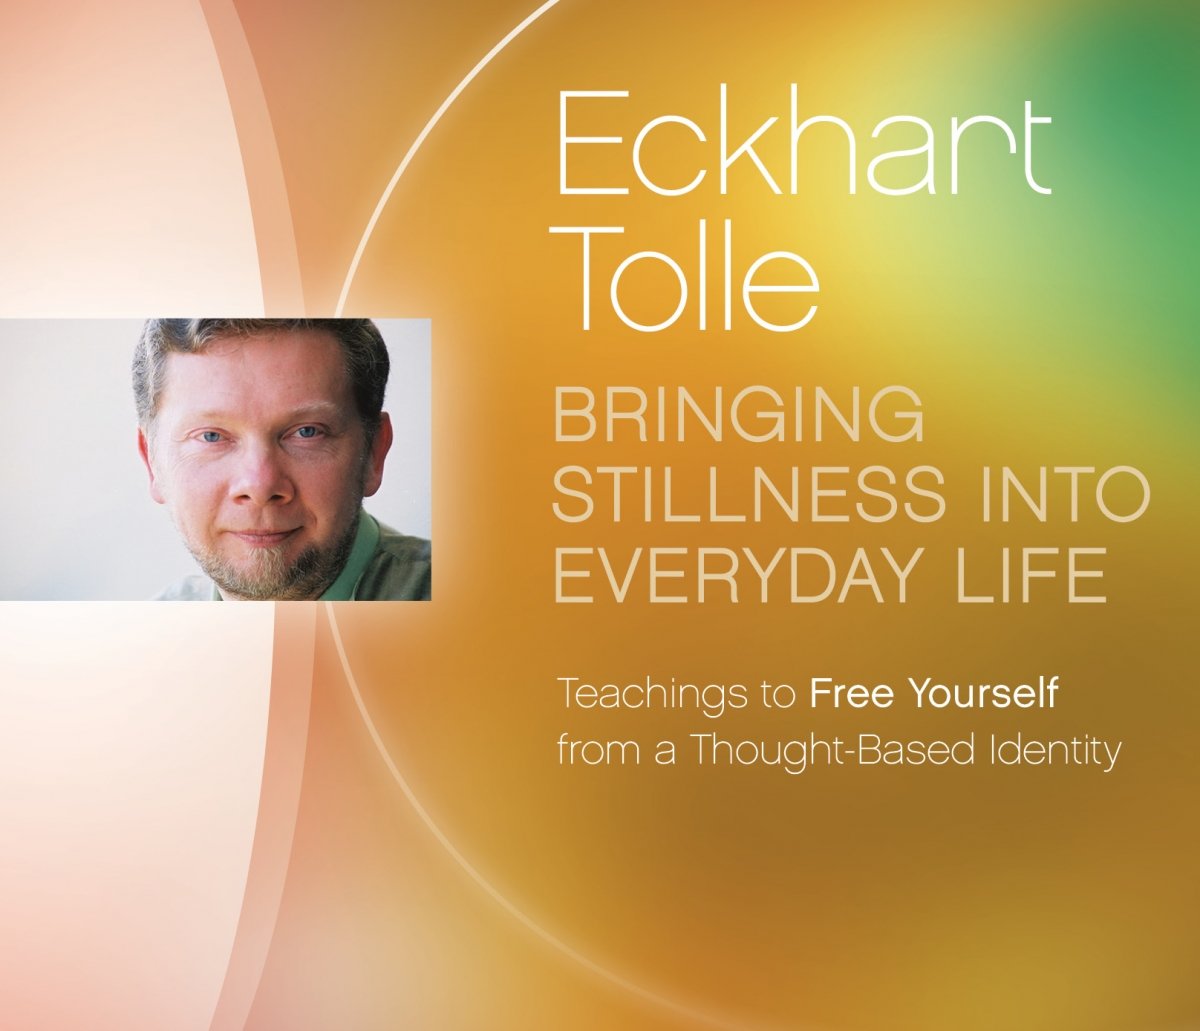 Bringing stillness into everyday life - Eckhart Tolle